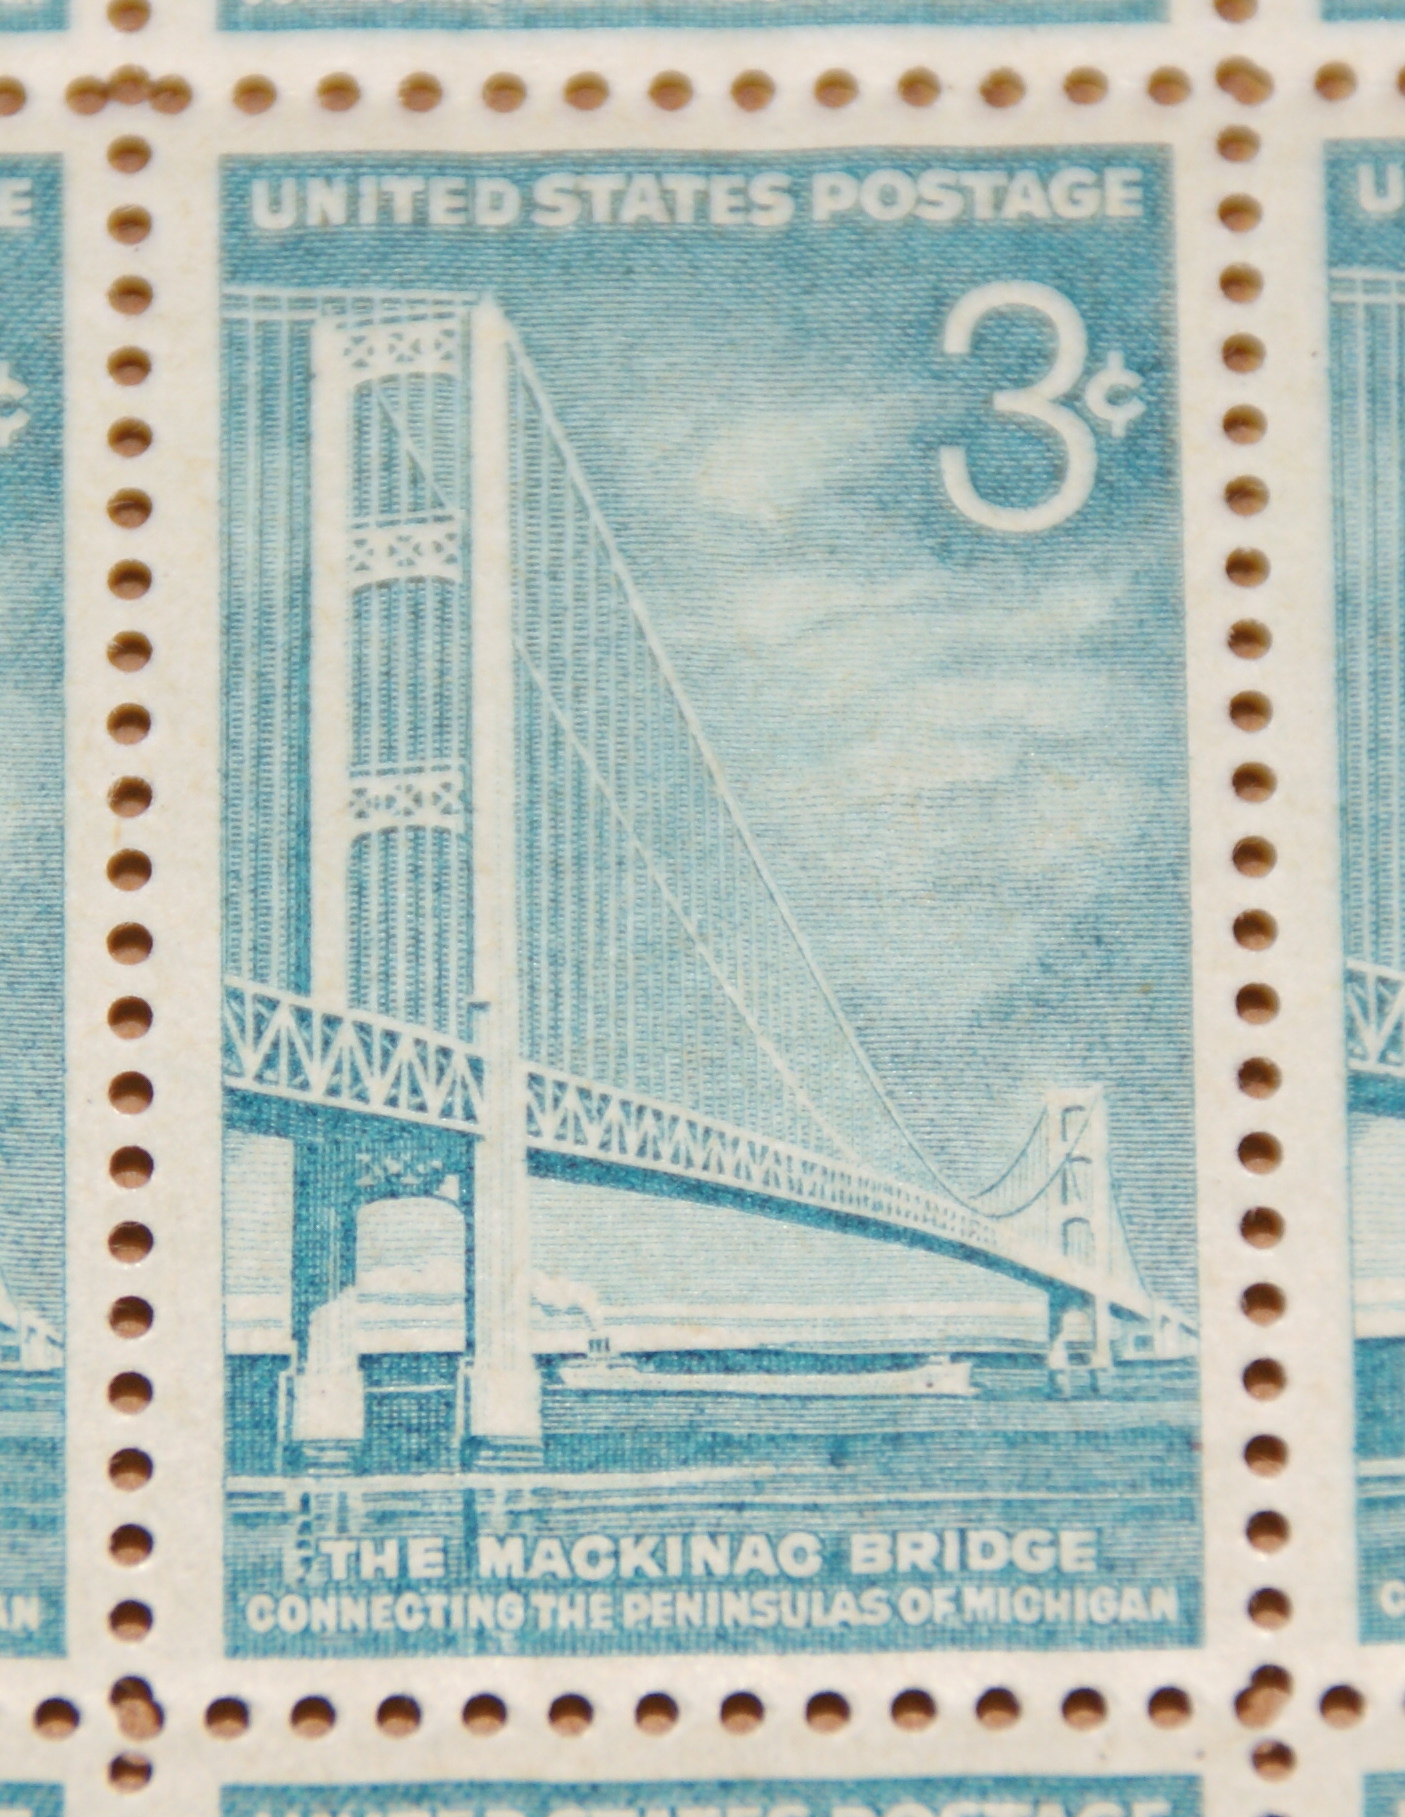 US 1958 Mackinac Bridge Postage Stamp #1109 Single Stamp 